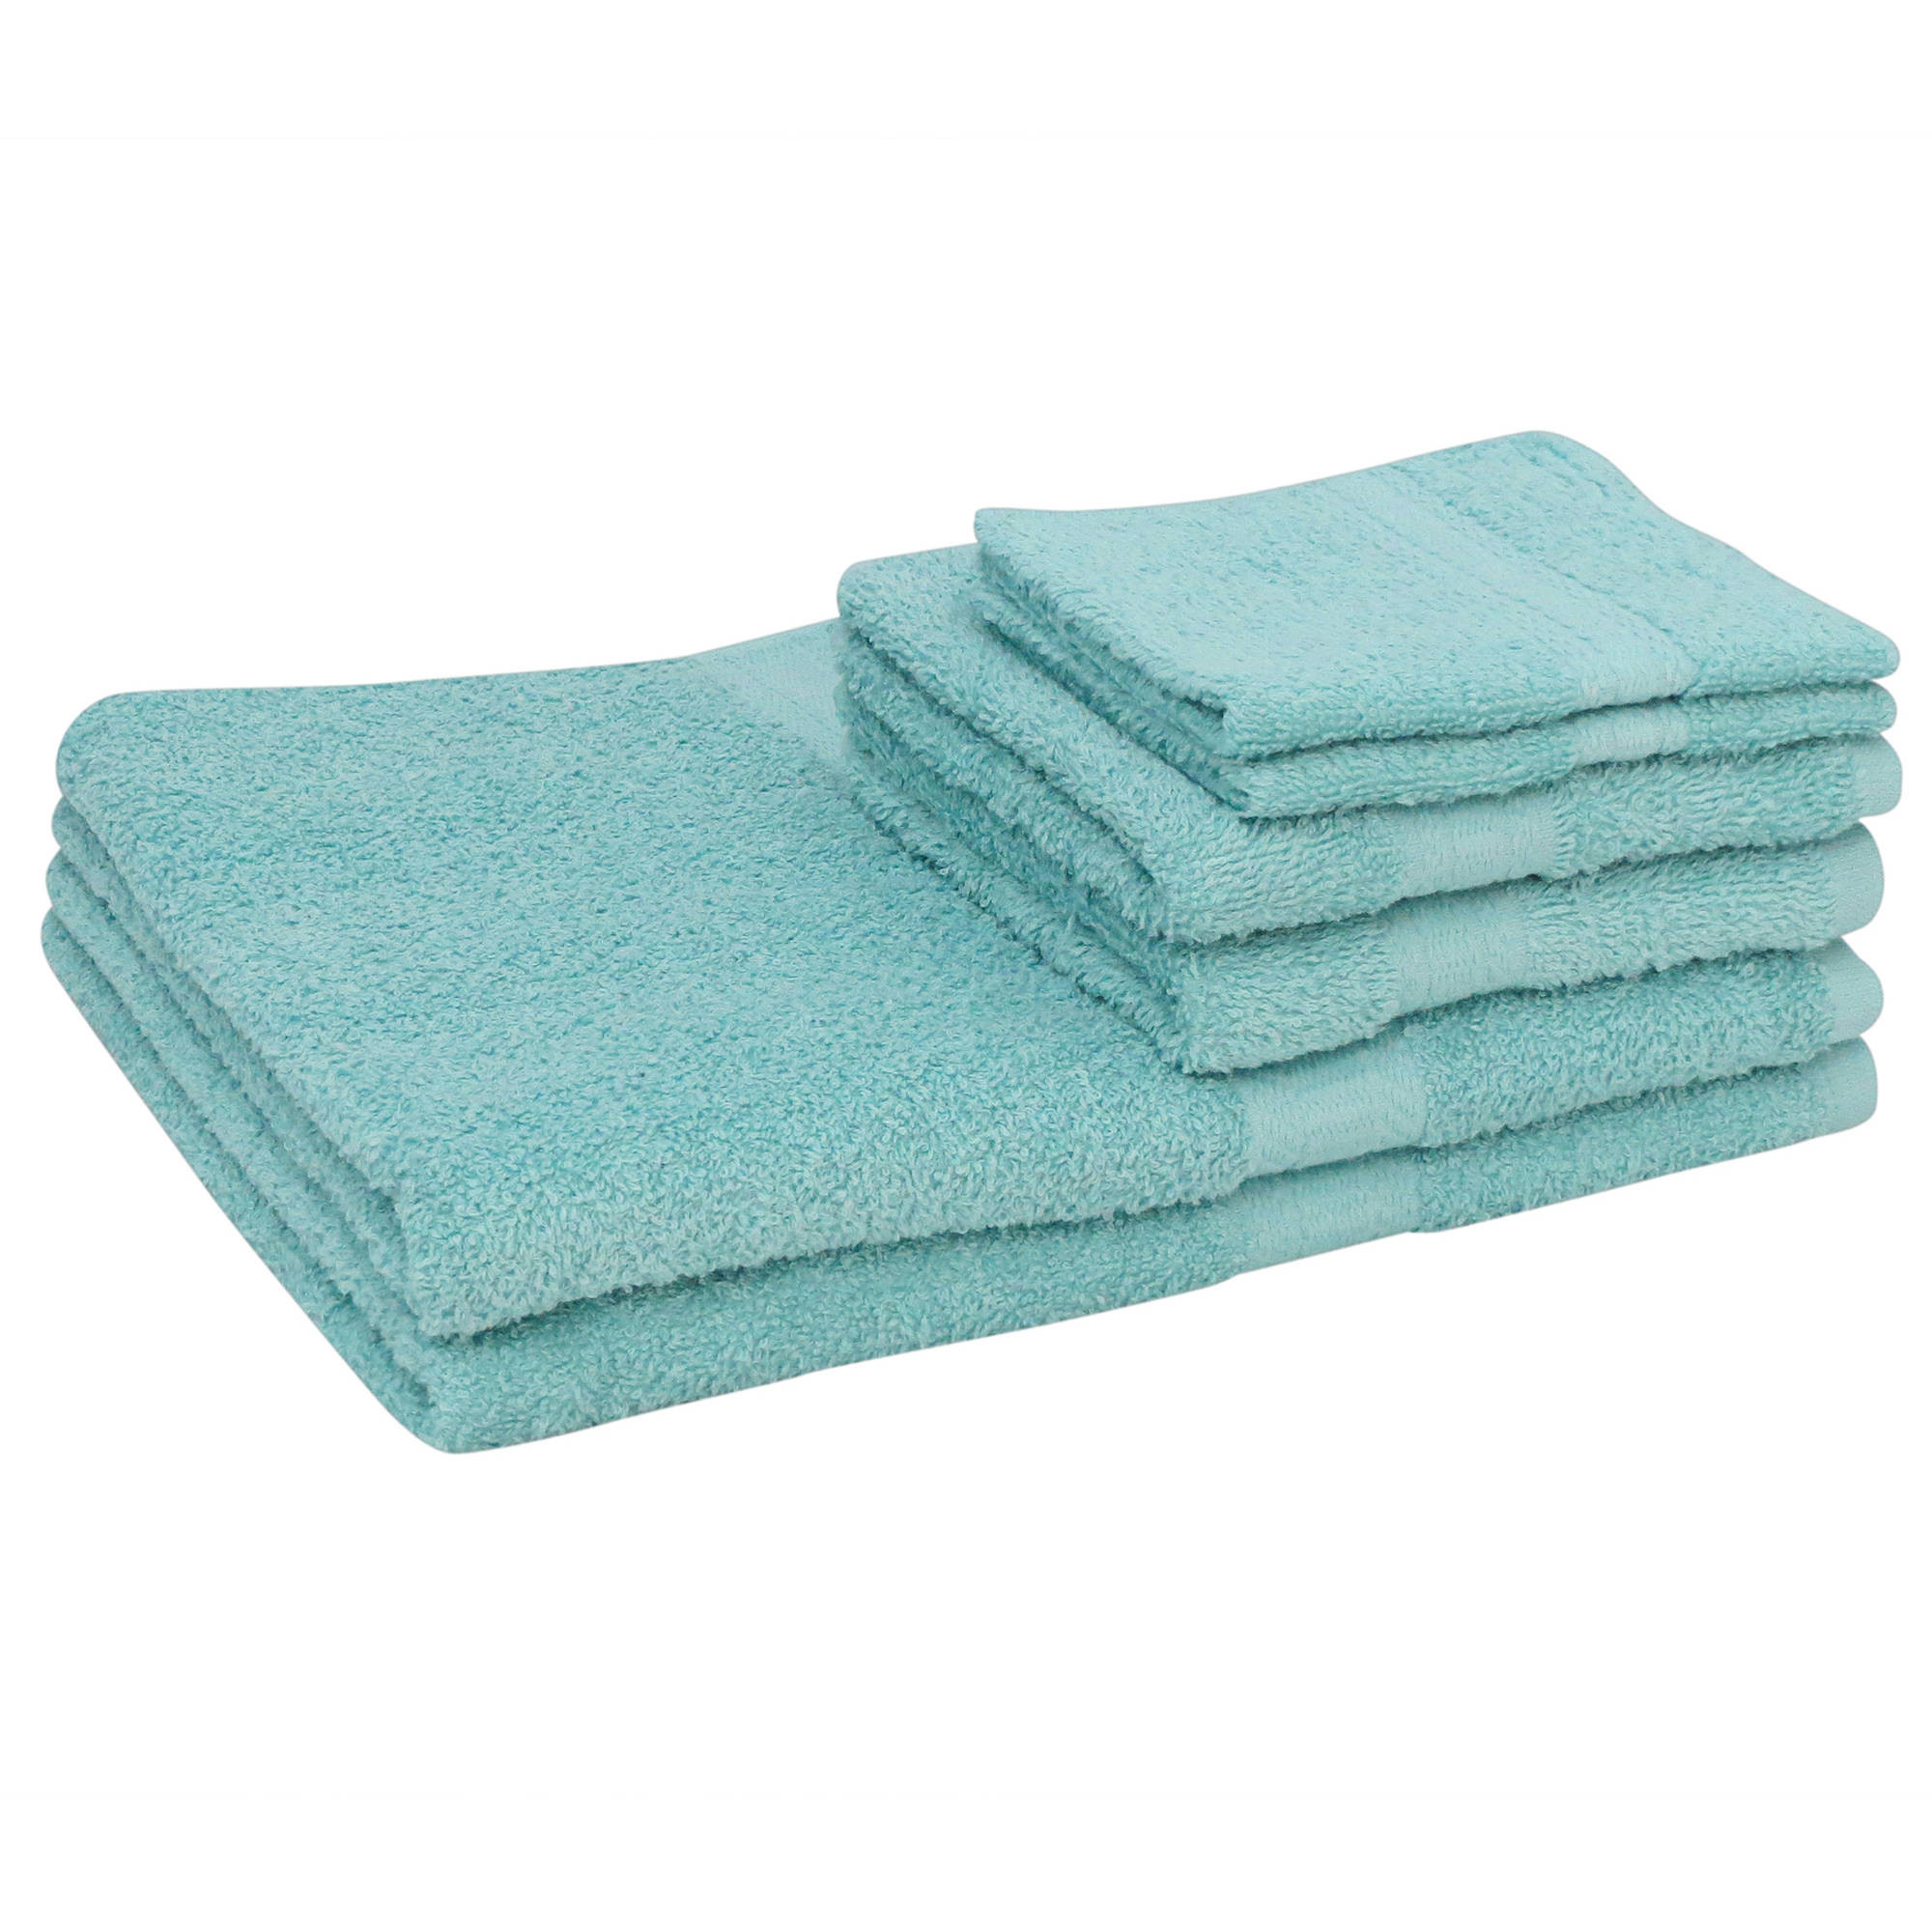 Kids Bathroom Sets Walmart
 Mainstays Basic Cotton Bath Towel Set 6 Piece Set